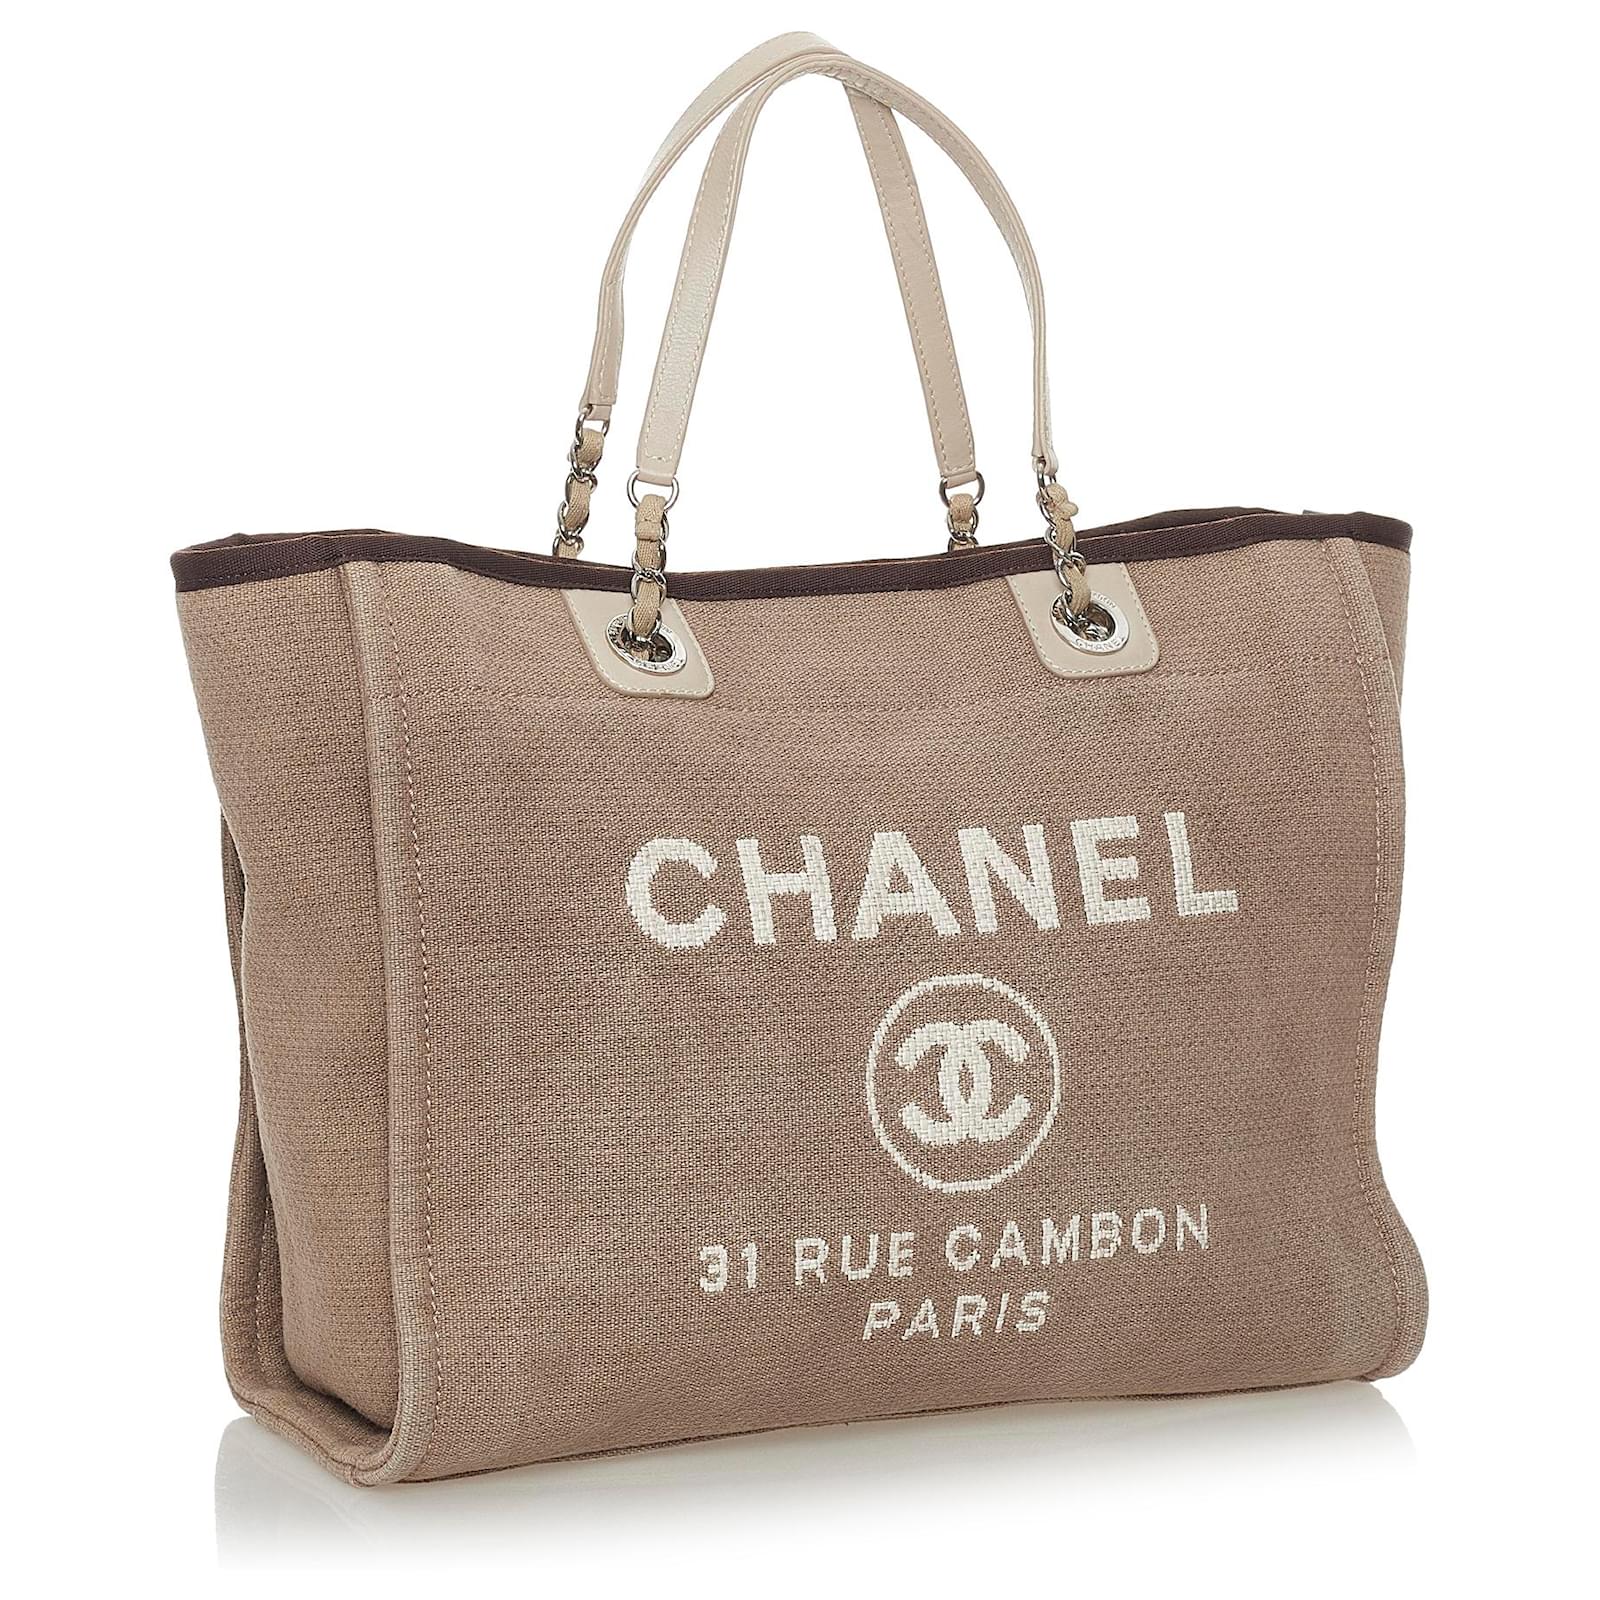 Chanel bag  Bags, Chanel bag, Fashion bags